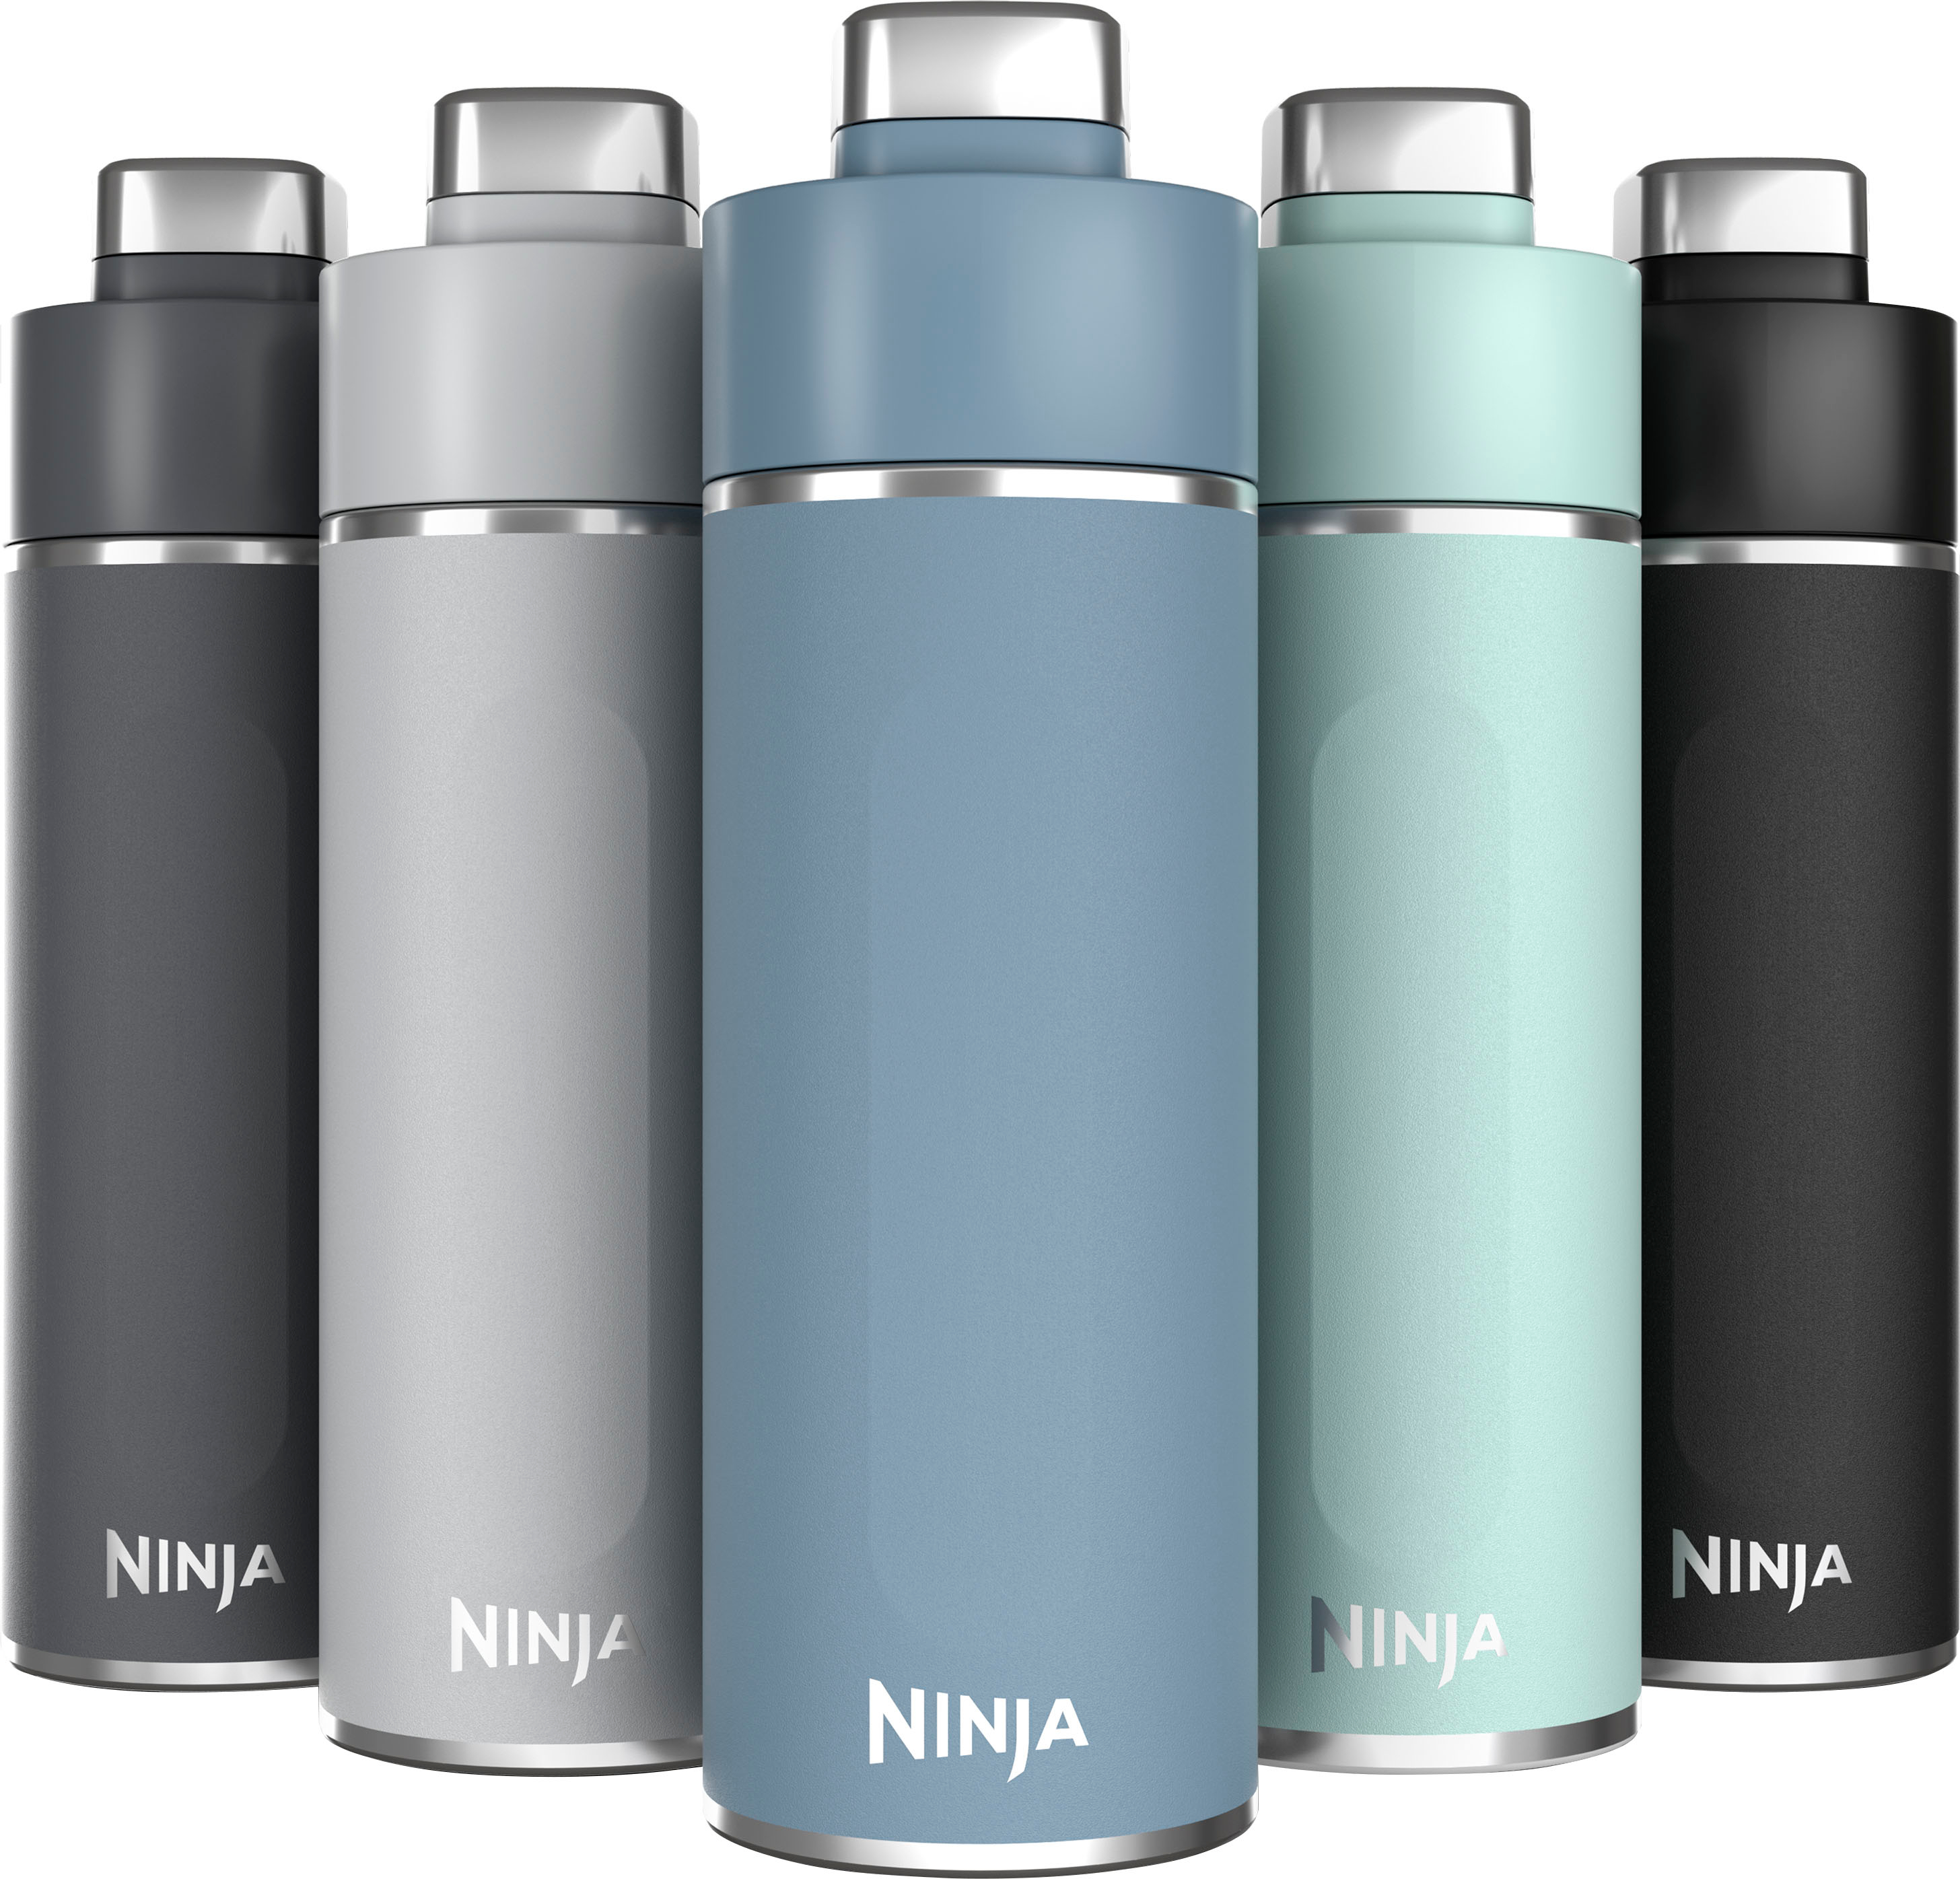 Ninja Thirsti 24-Oz. Black Travel Bottle + Reviews